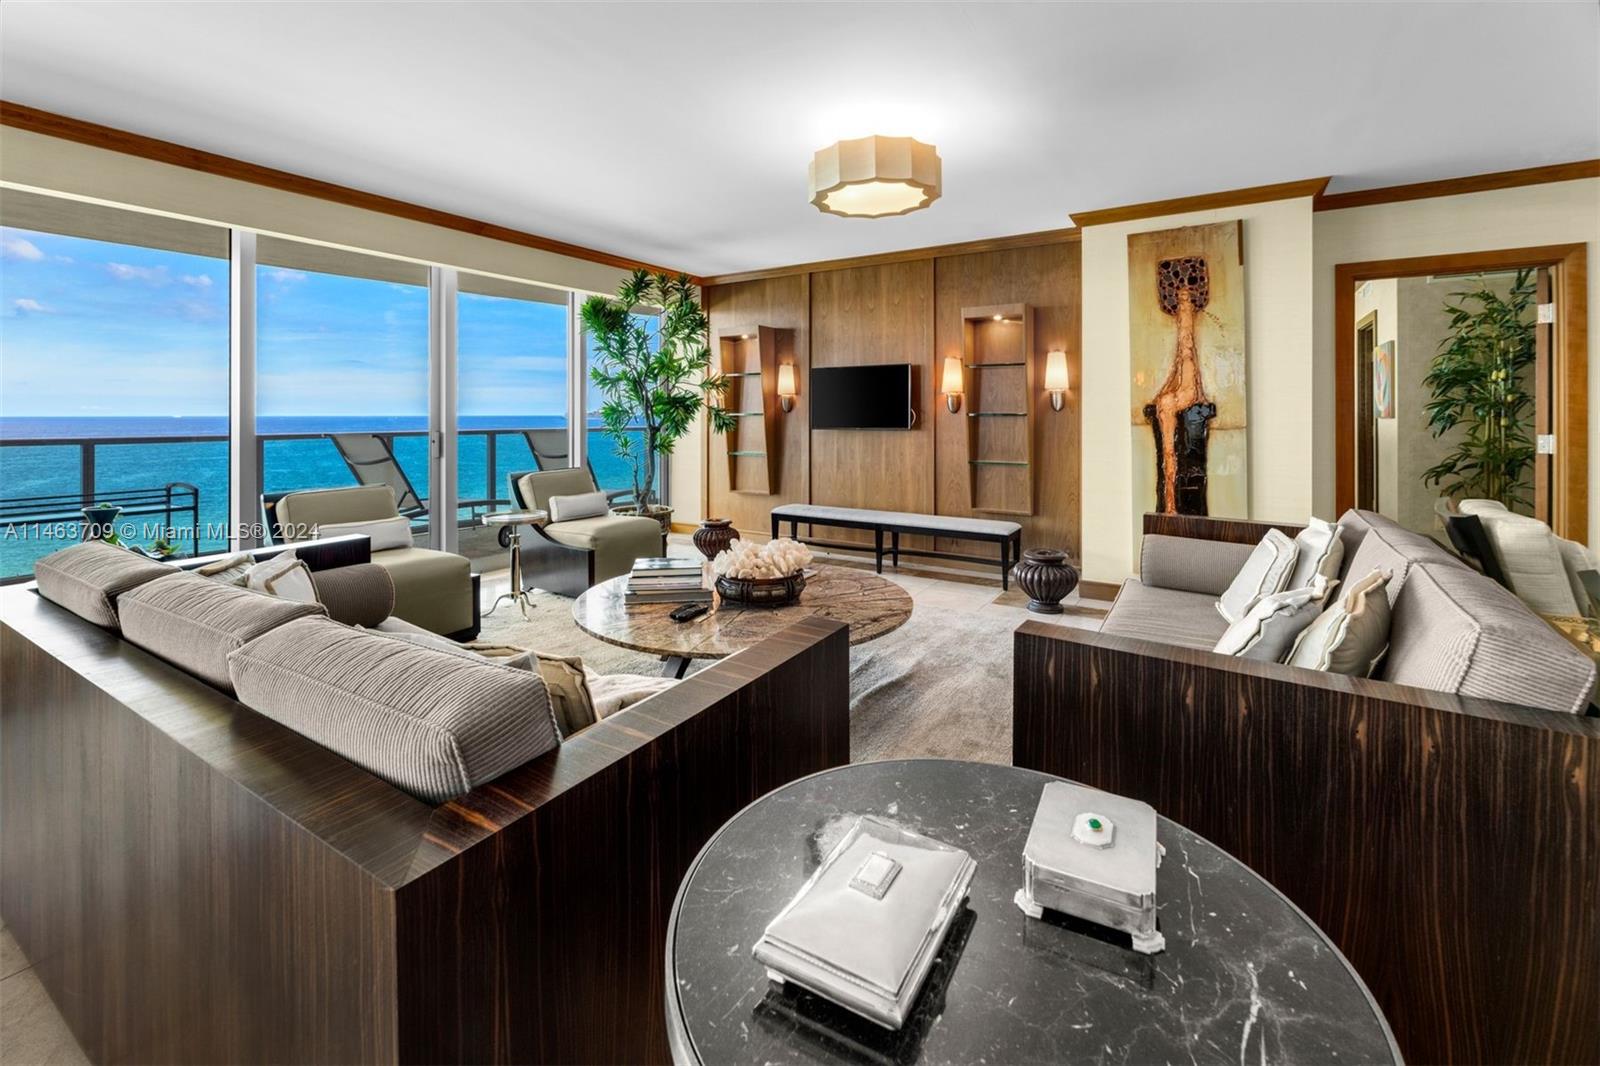 Property for Sale at 1455 Ocean Dr 1408, Miami Beach, Miami-Dade County, Florida - Bedrooms: 3 
Bathrooms: 4  - $5,495,000